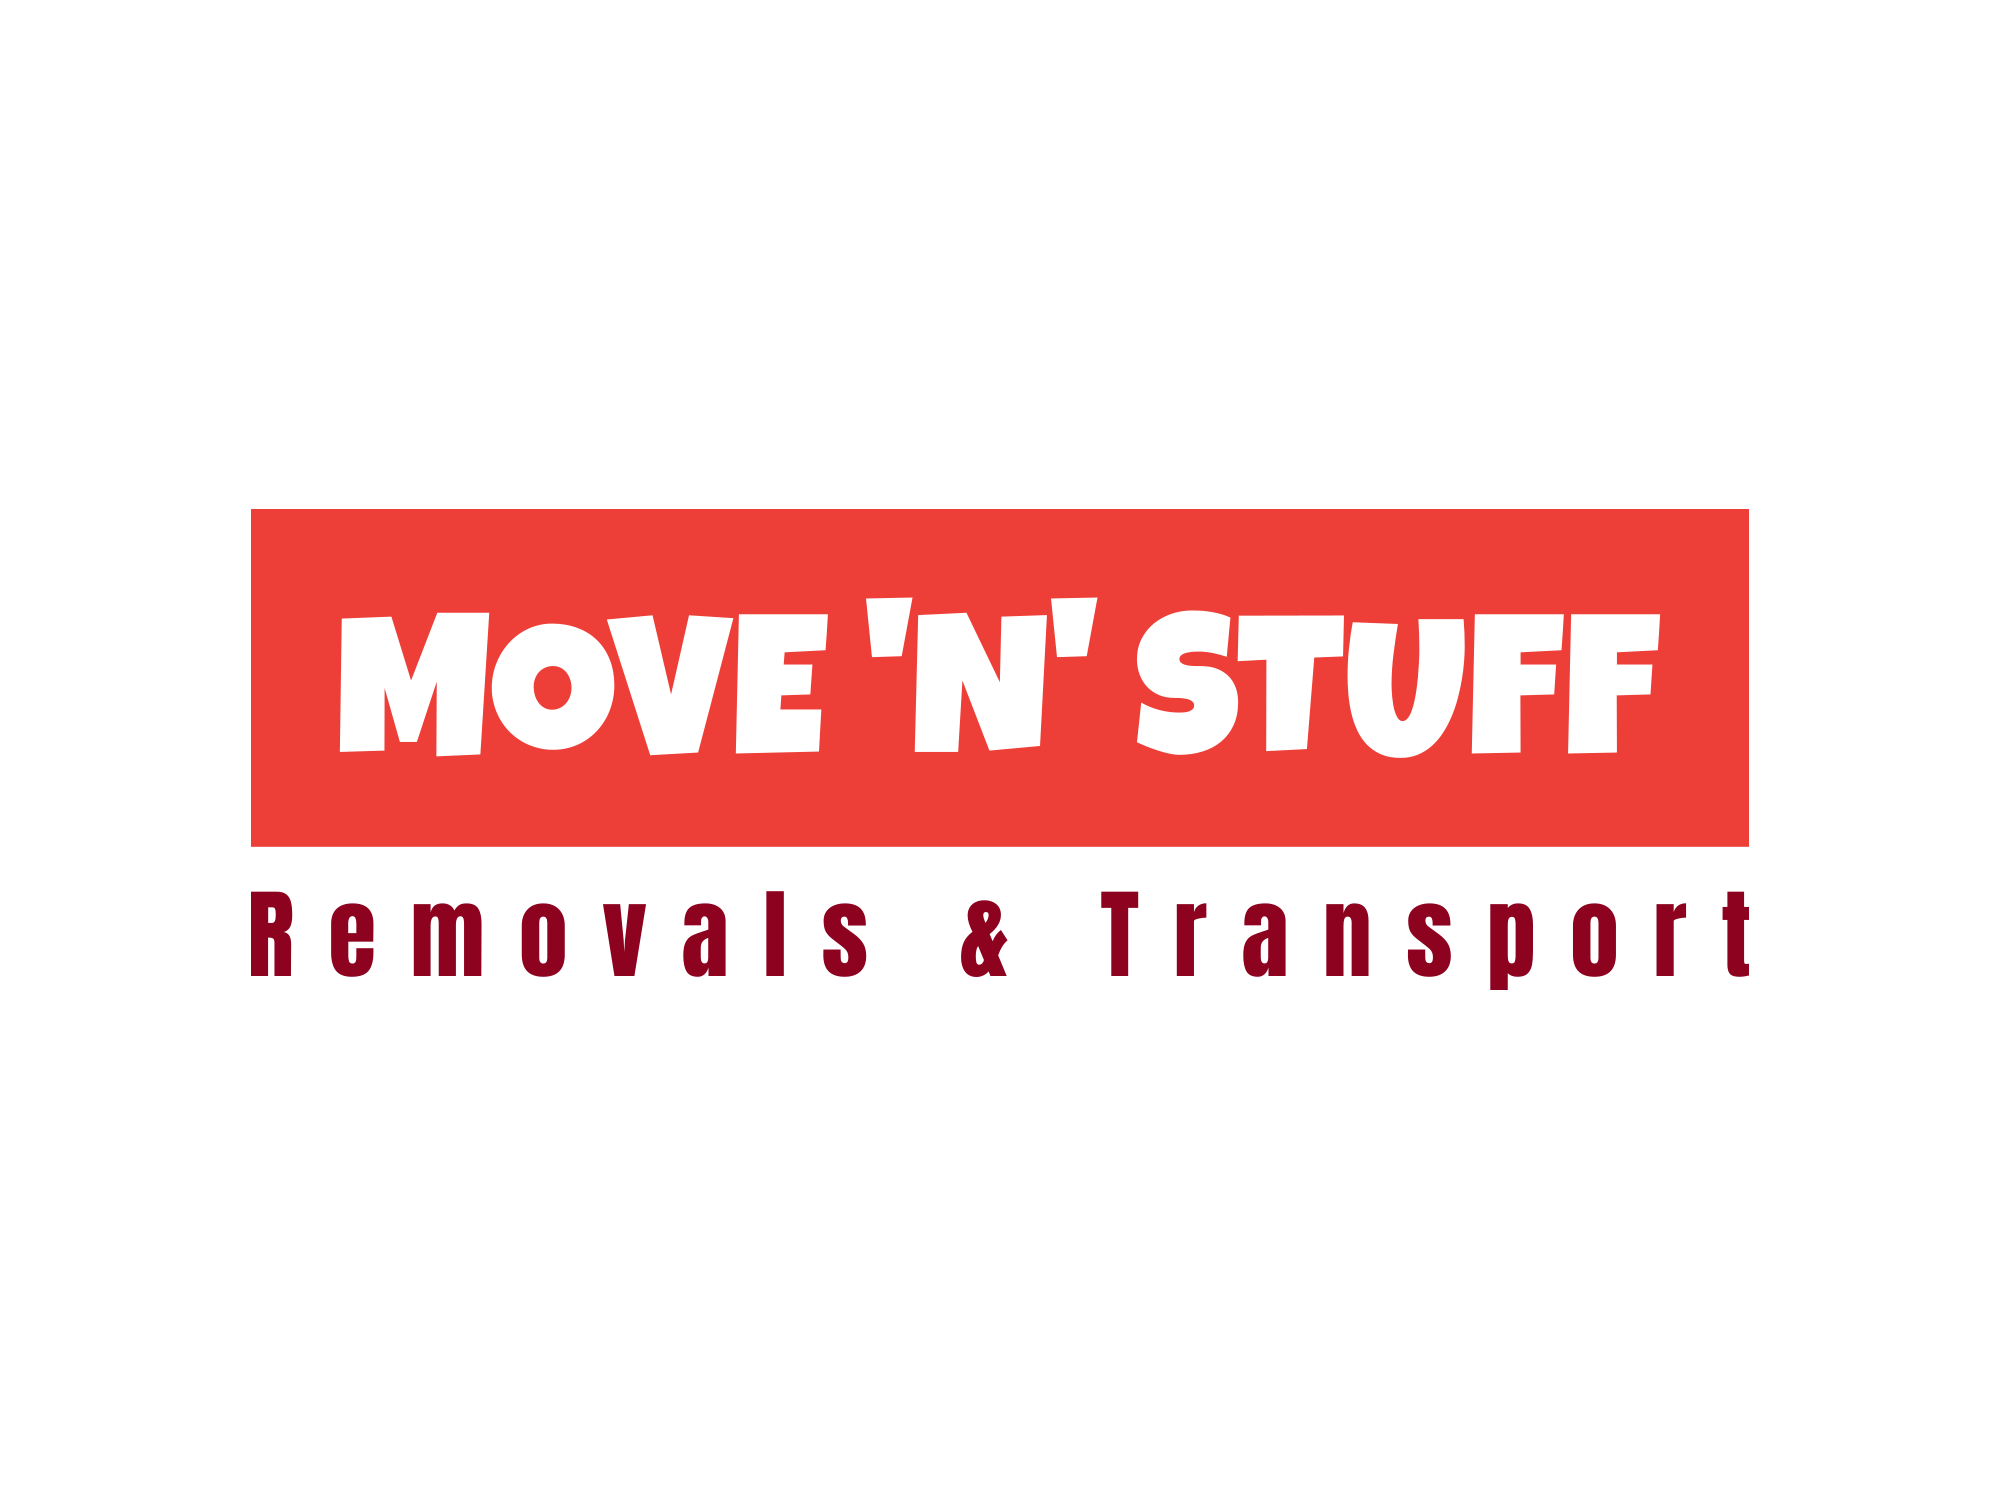 Move n stuff logo